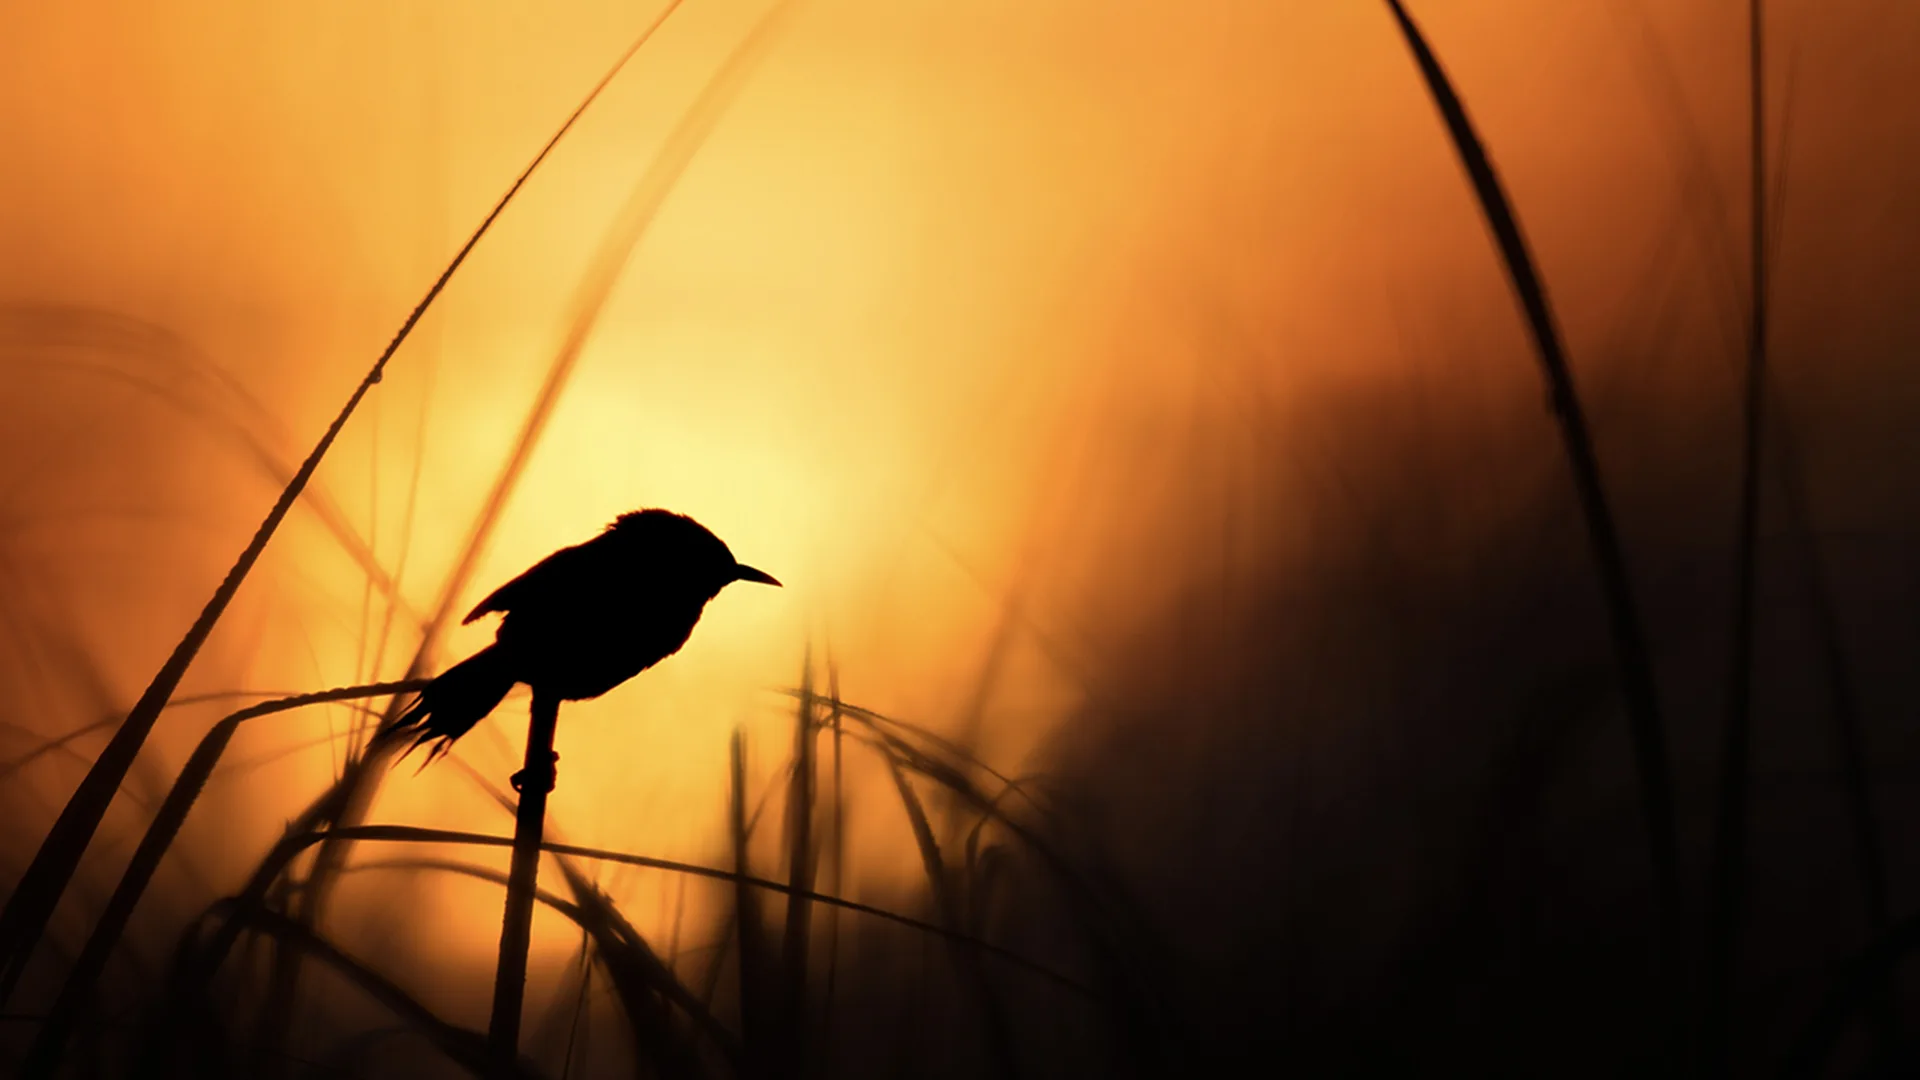 A small bird at sunrise